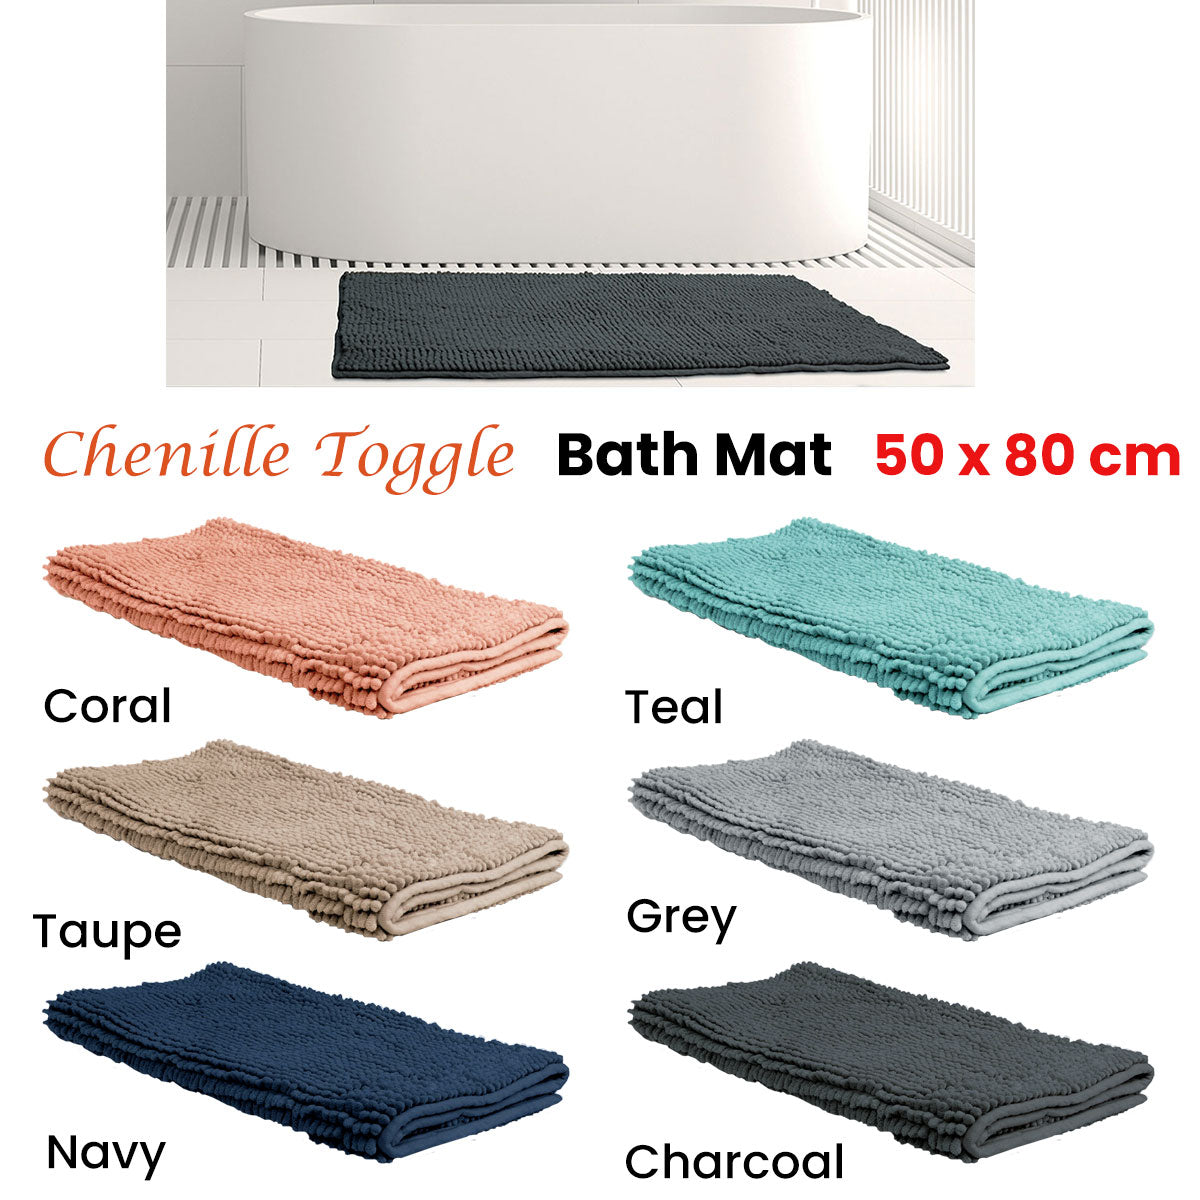 Chenille Toggle Bath Mat 50 x 80cm Teal - BM House & Garden